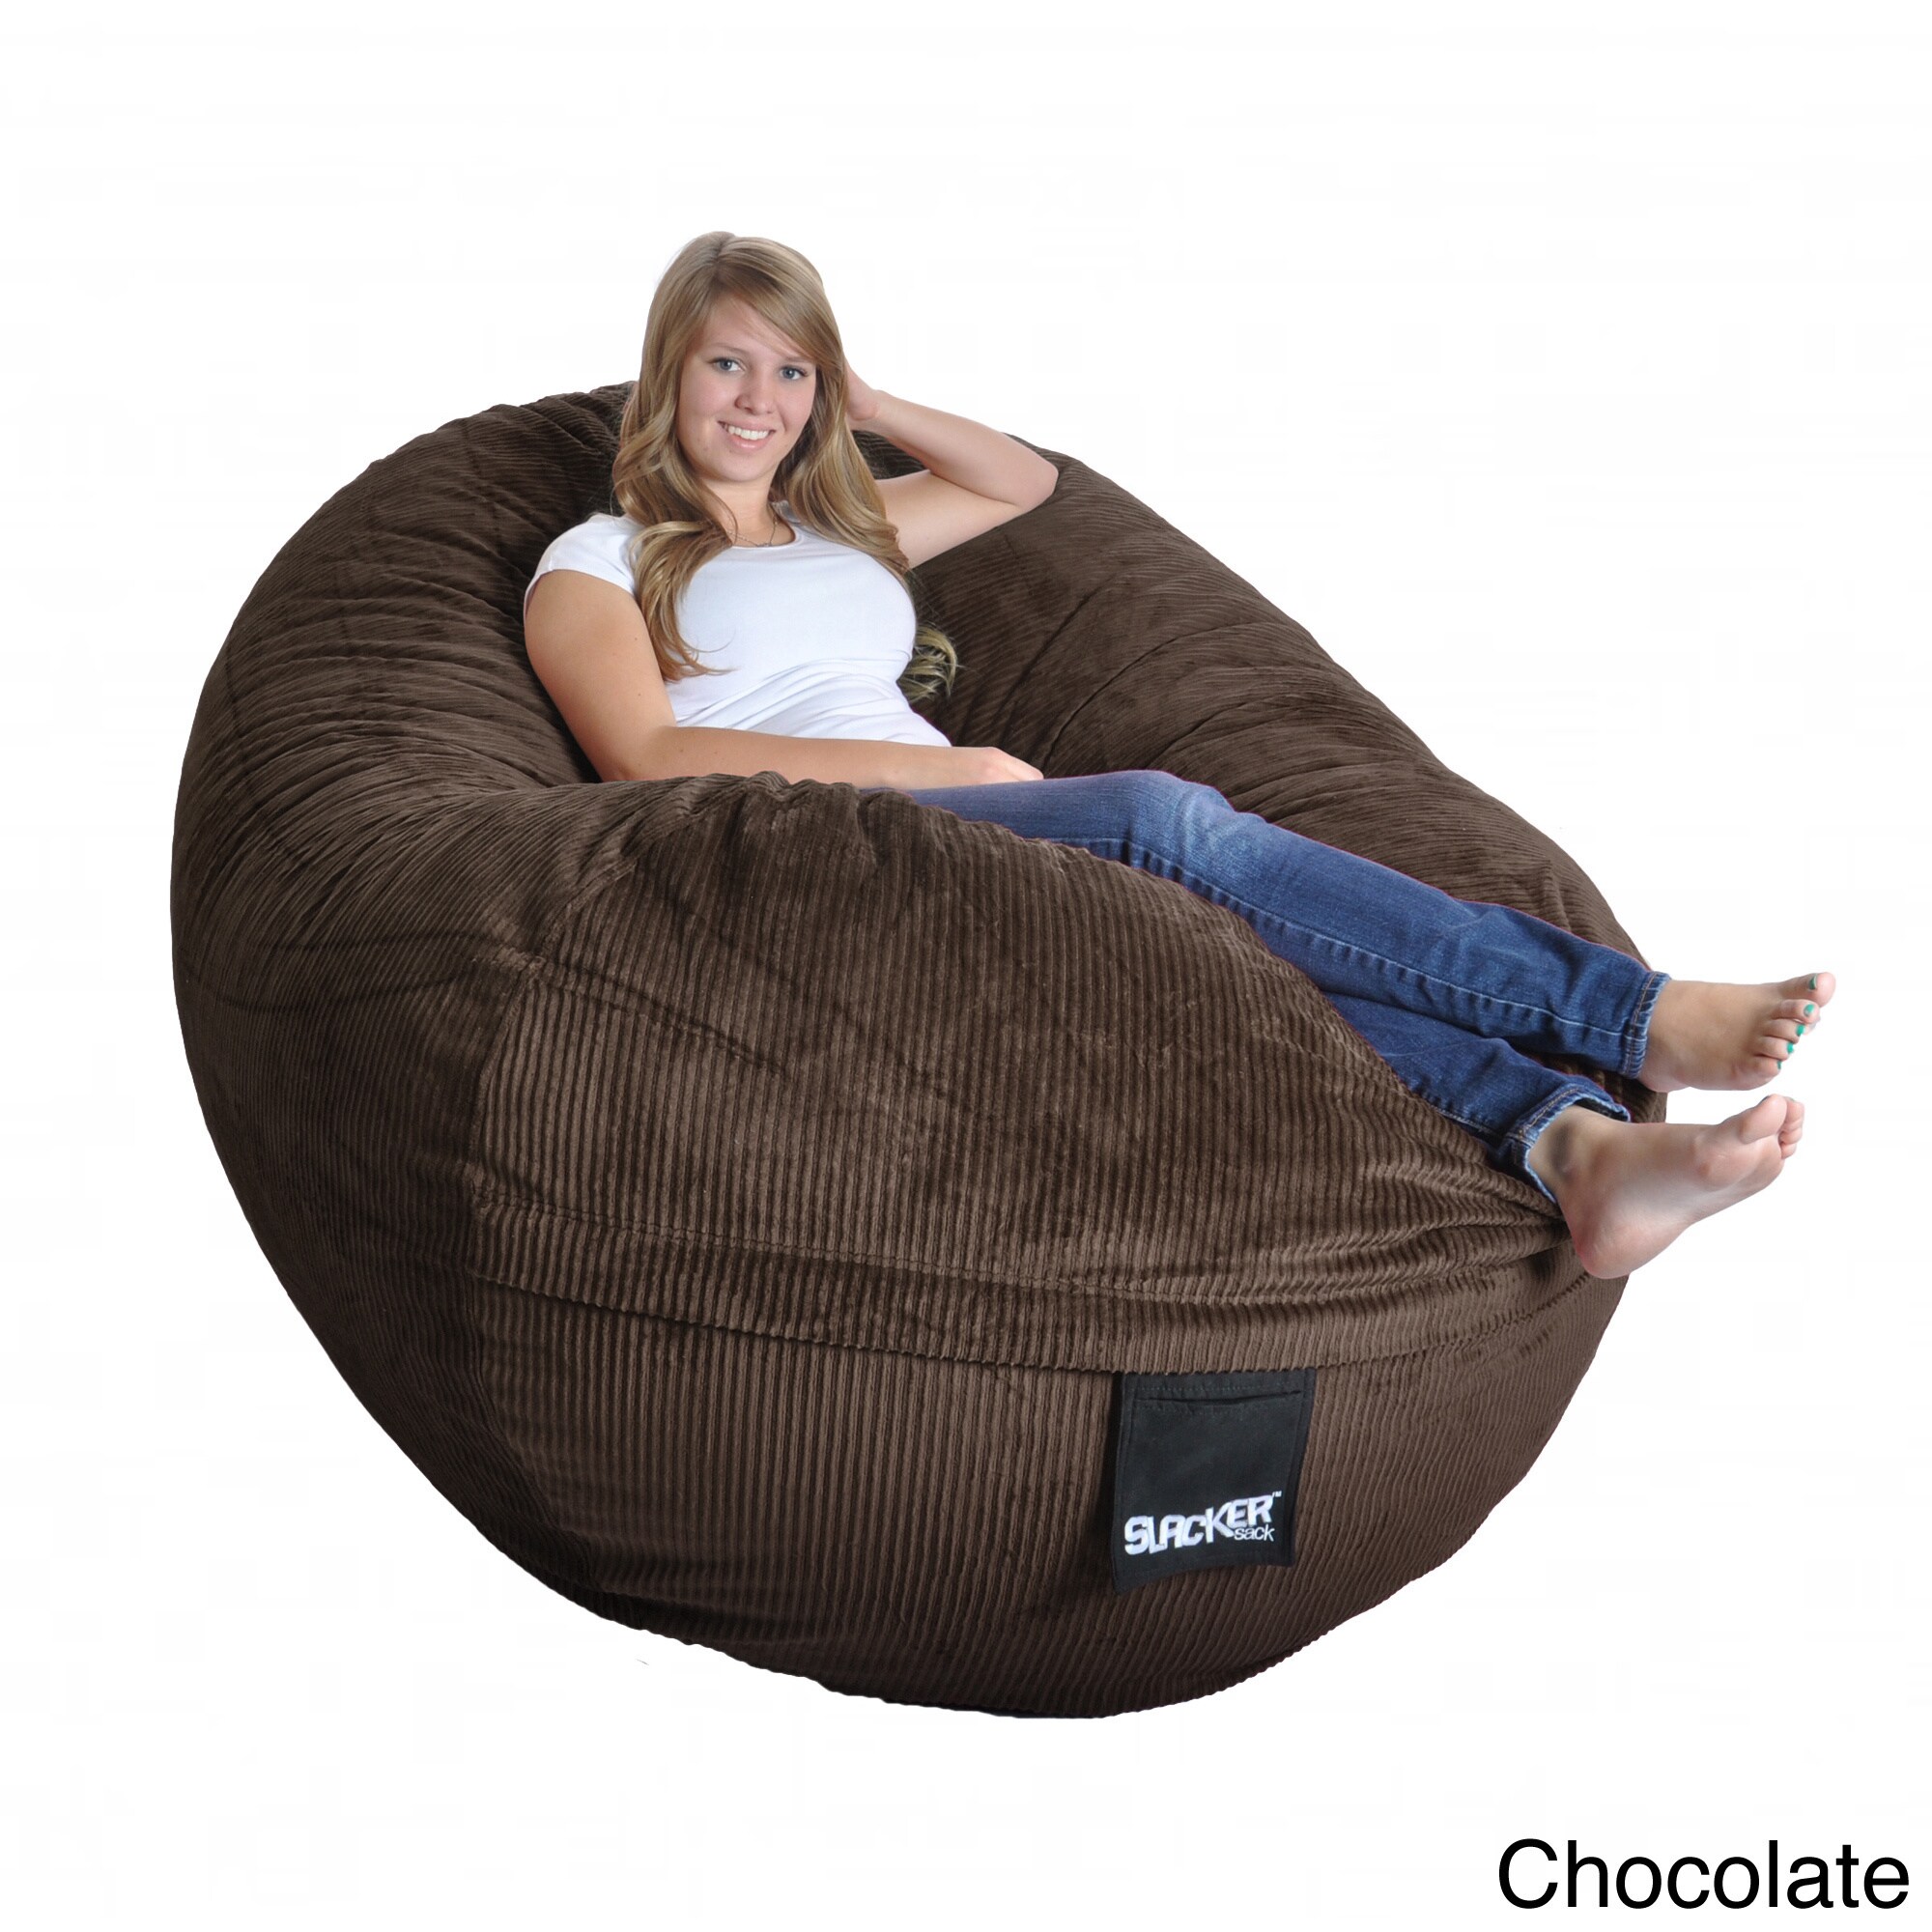 Slacker Sack Corduroy Oval Large Microfiber Suede and Foam Bean Bag Chair Chocolate Corduroy - image 1 of 3